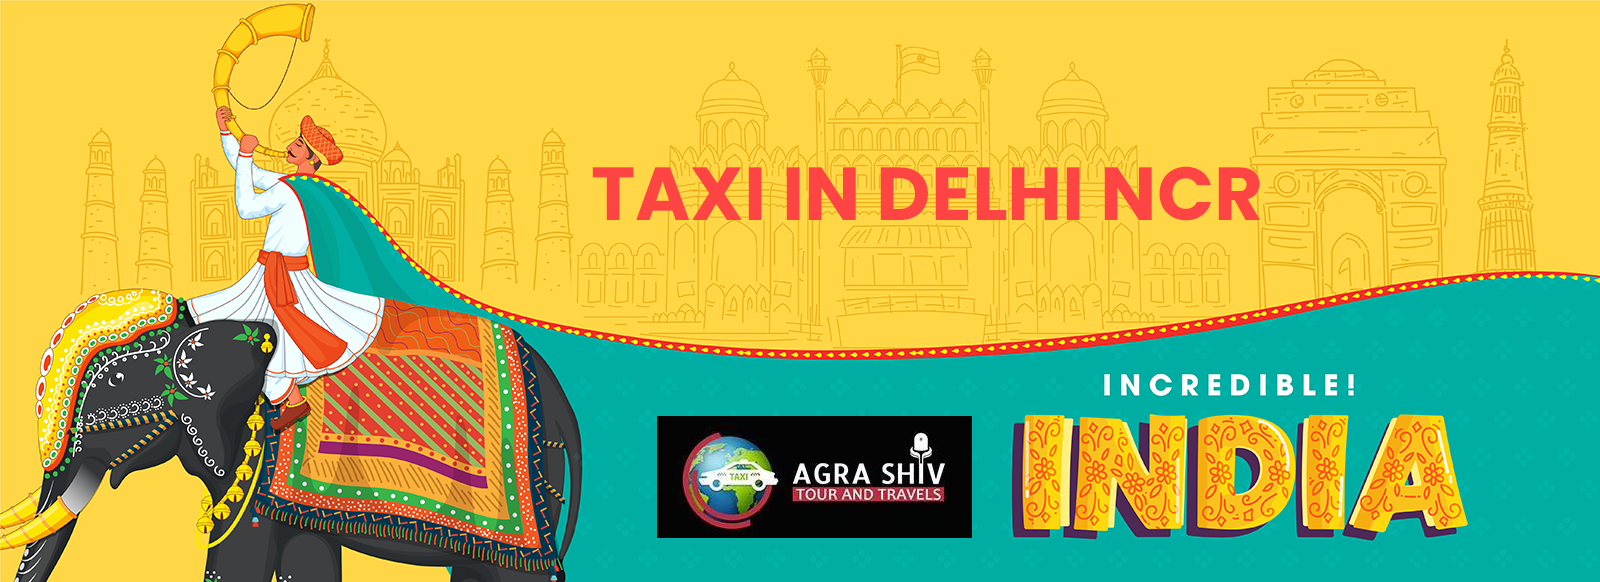 Taxi services in Delhi NCR